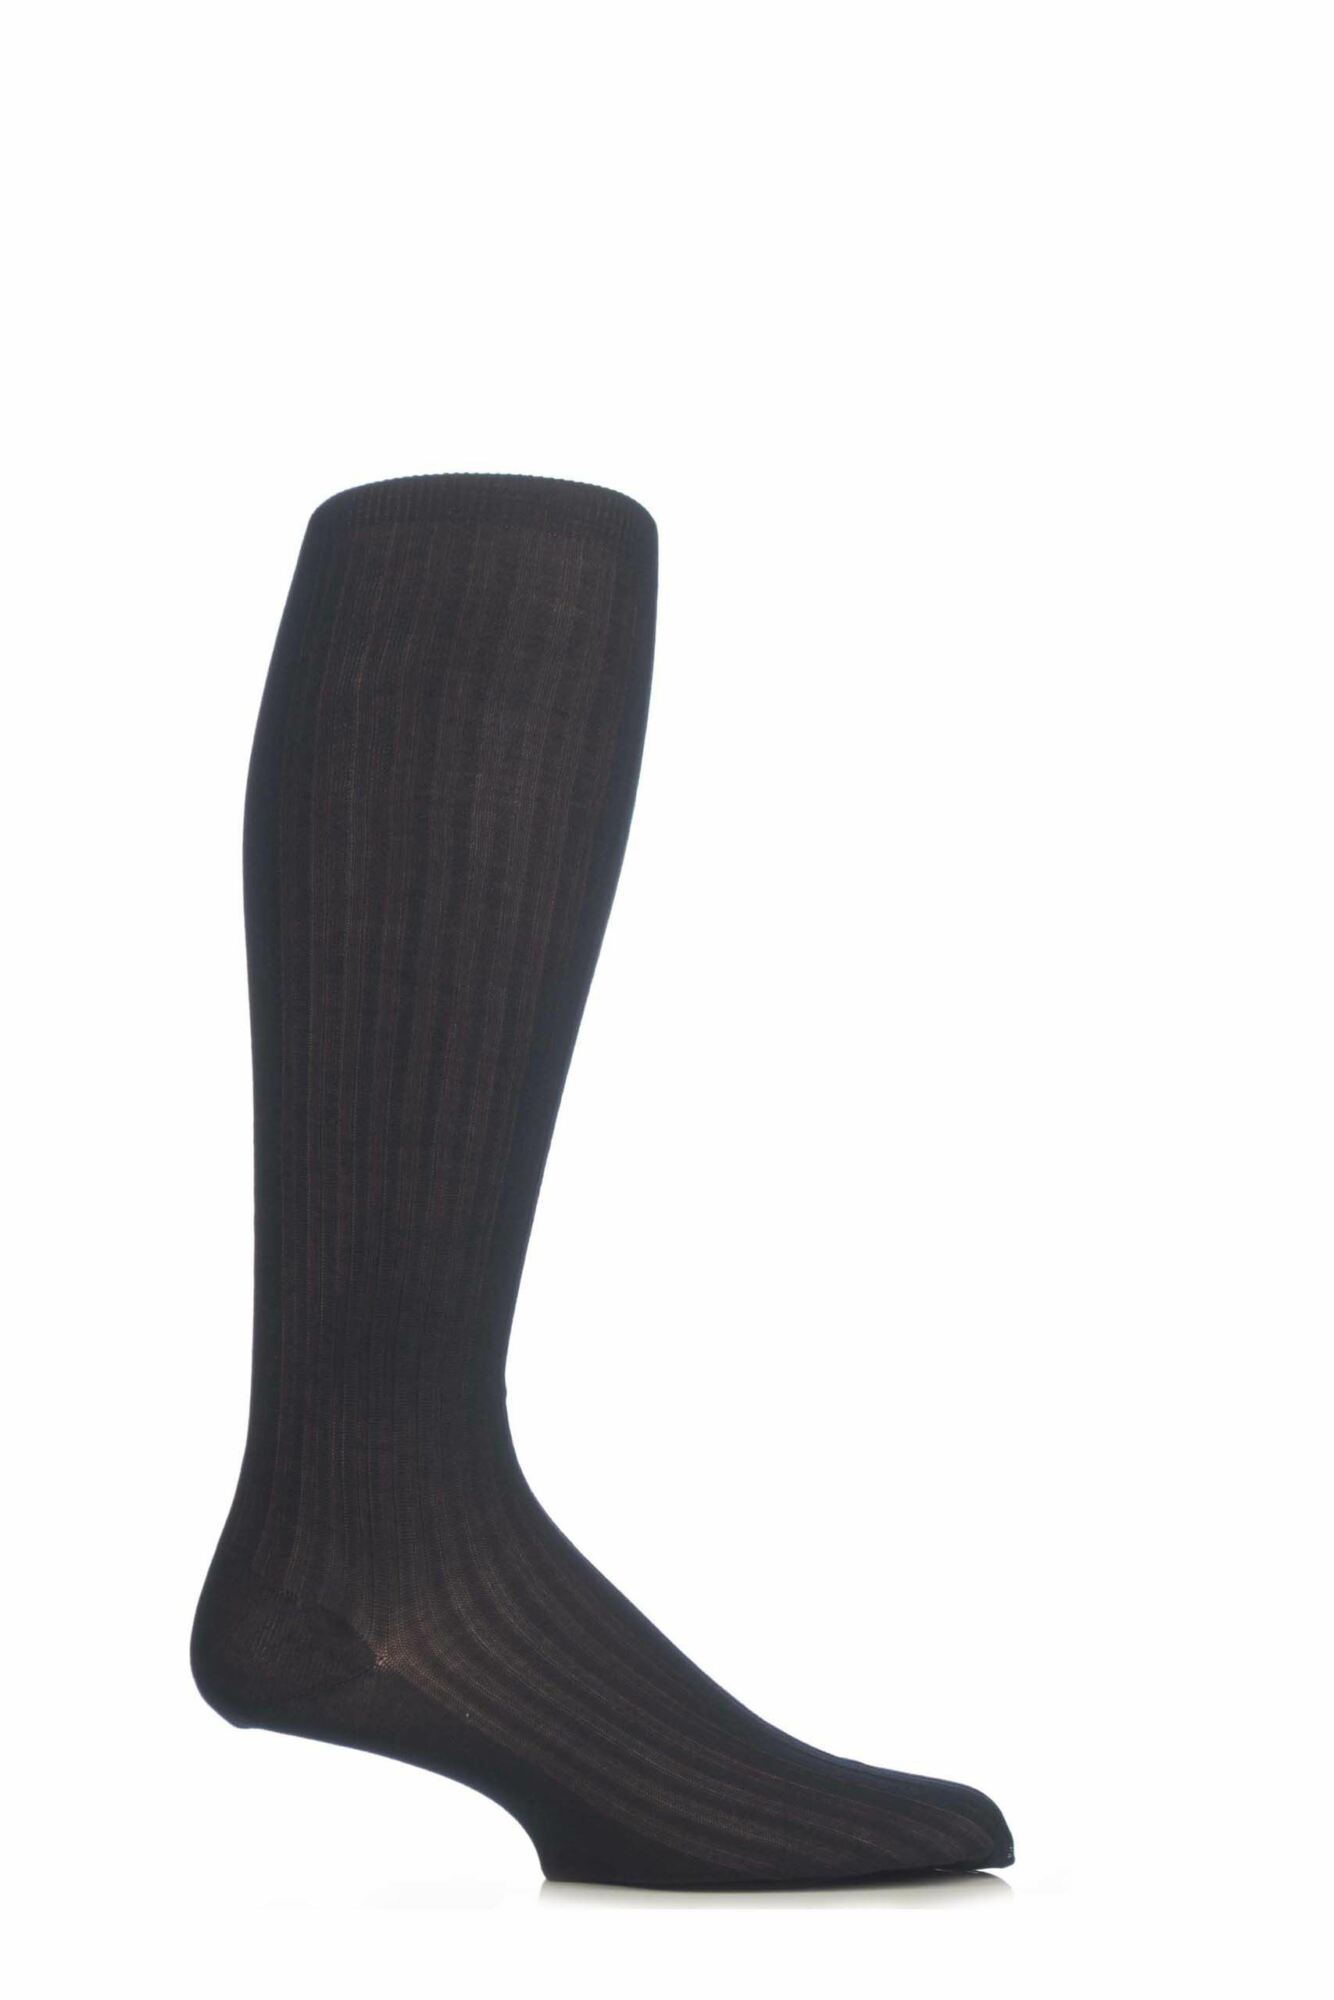 Pantherella Merino Wool Rib Knee High Socks | SOCKSHOP